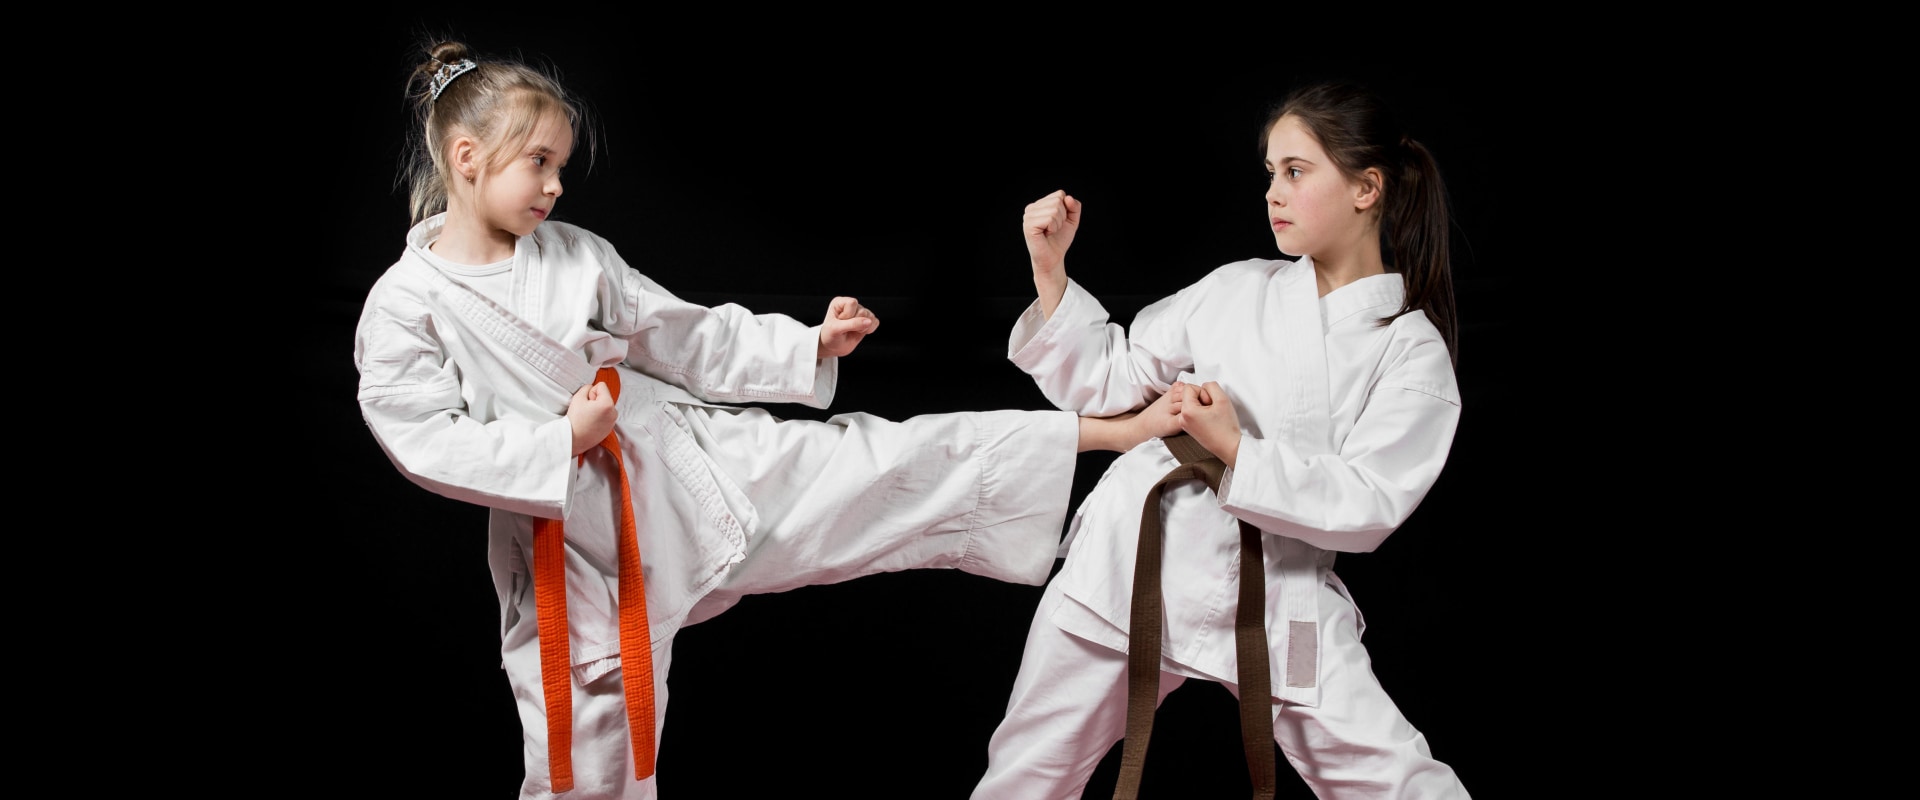 Is mixed martial arts dangerous?